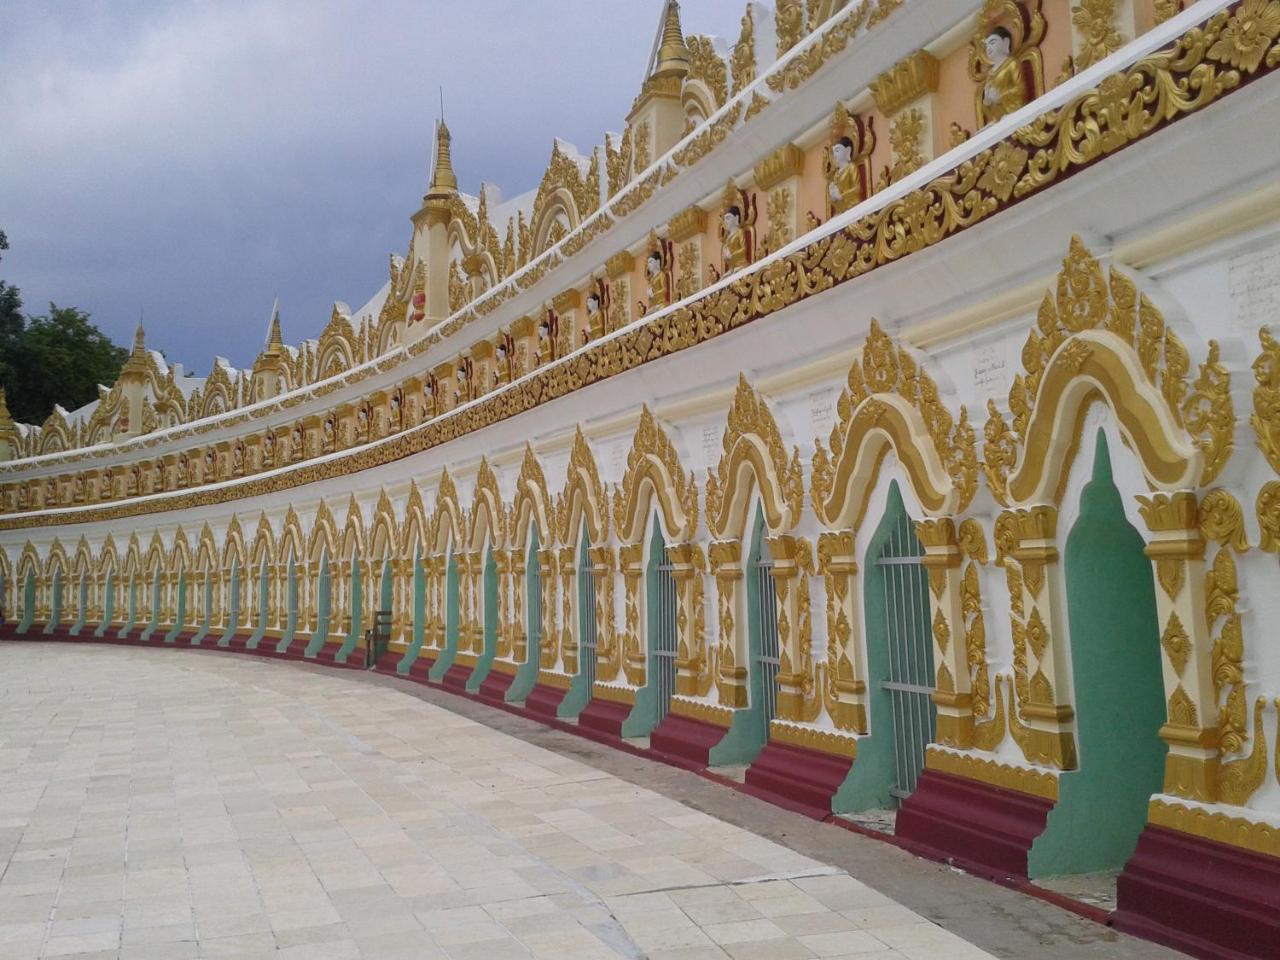 Moon Light Hotel Mandalay Exterior foto